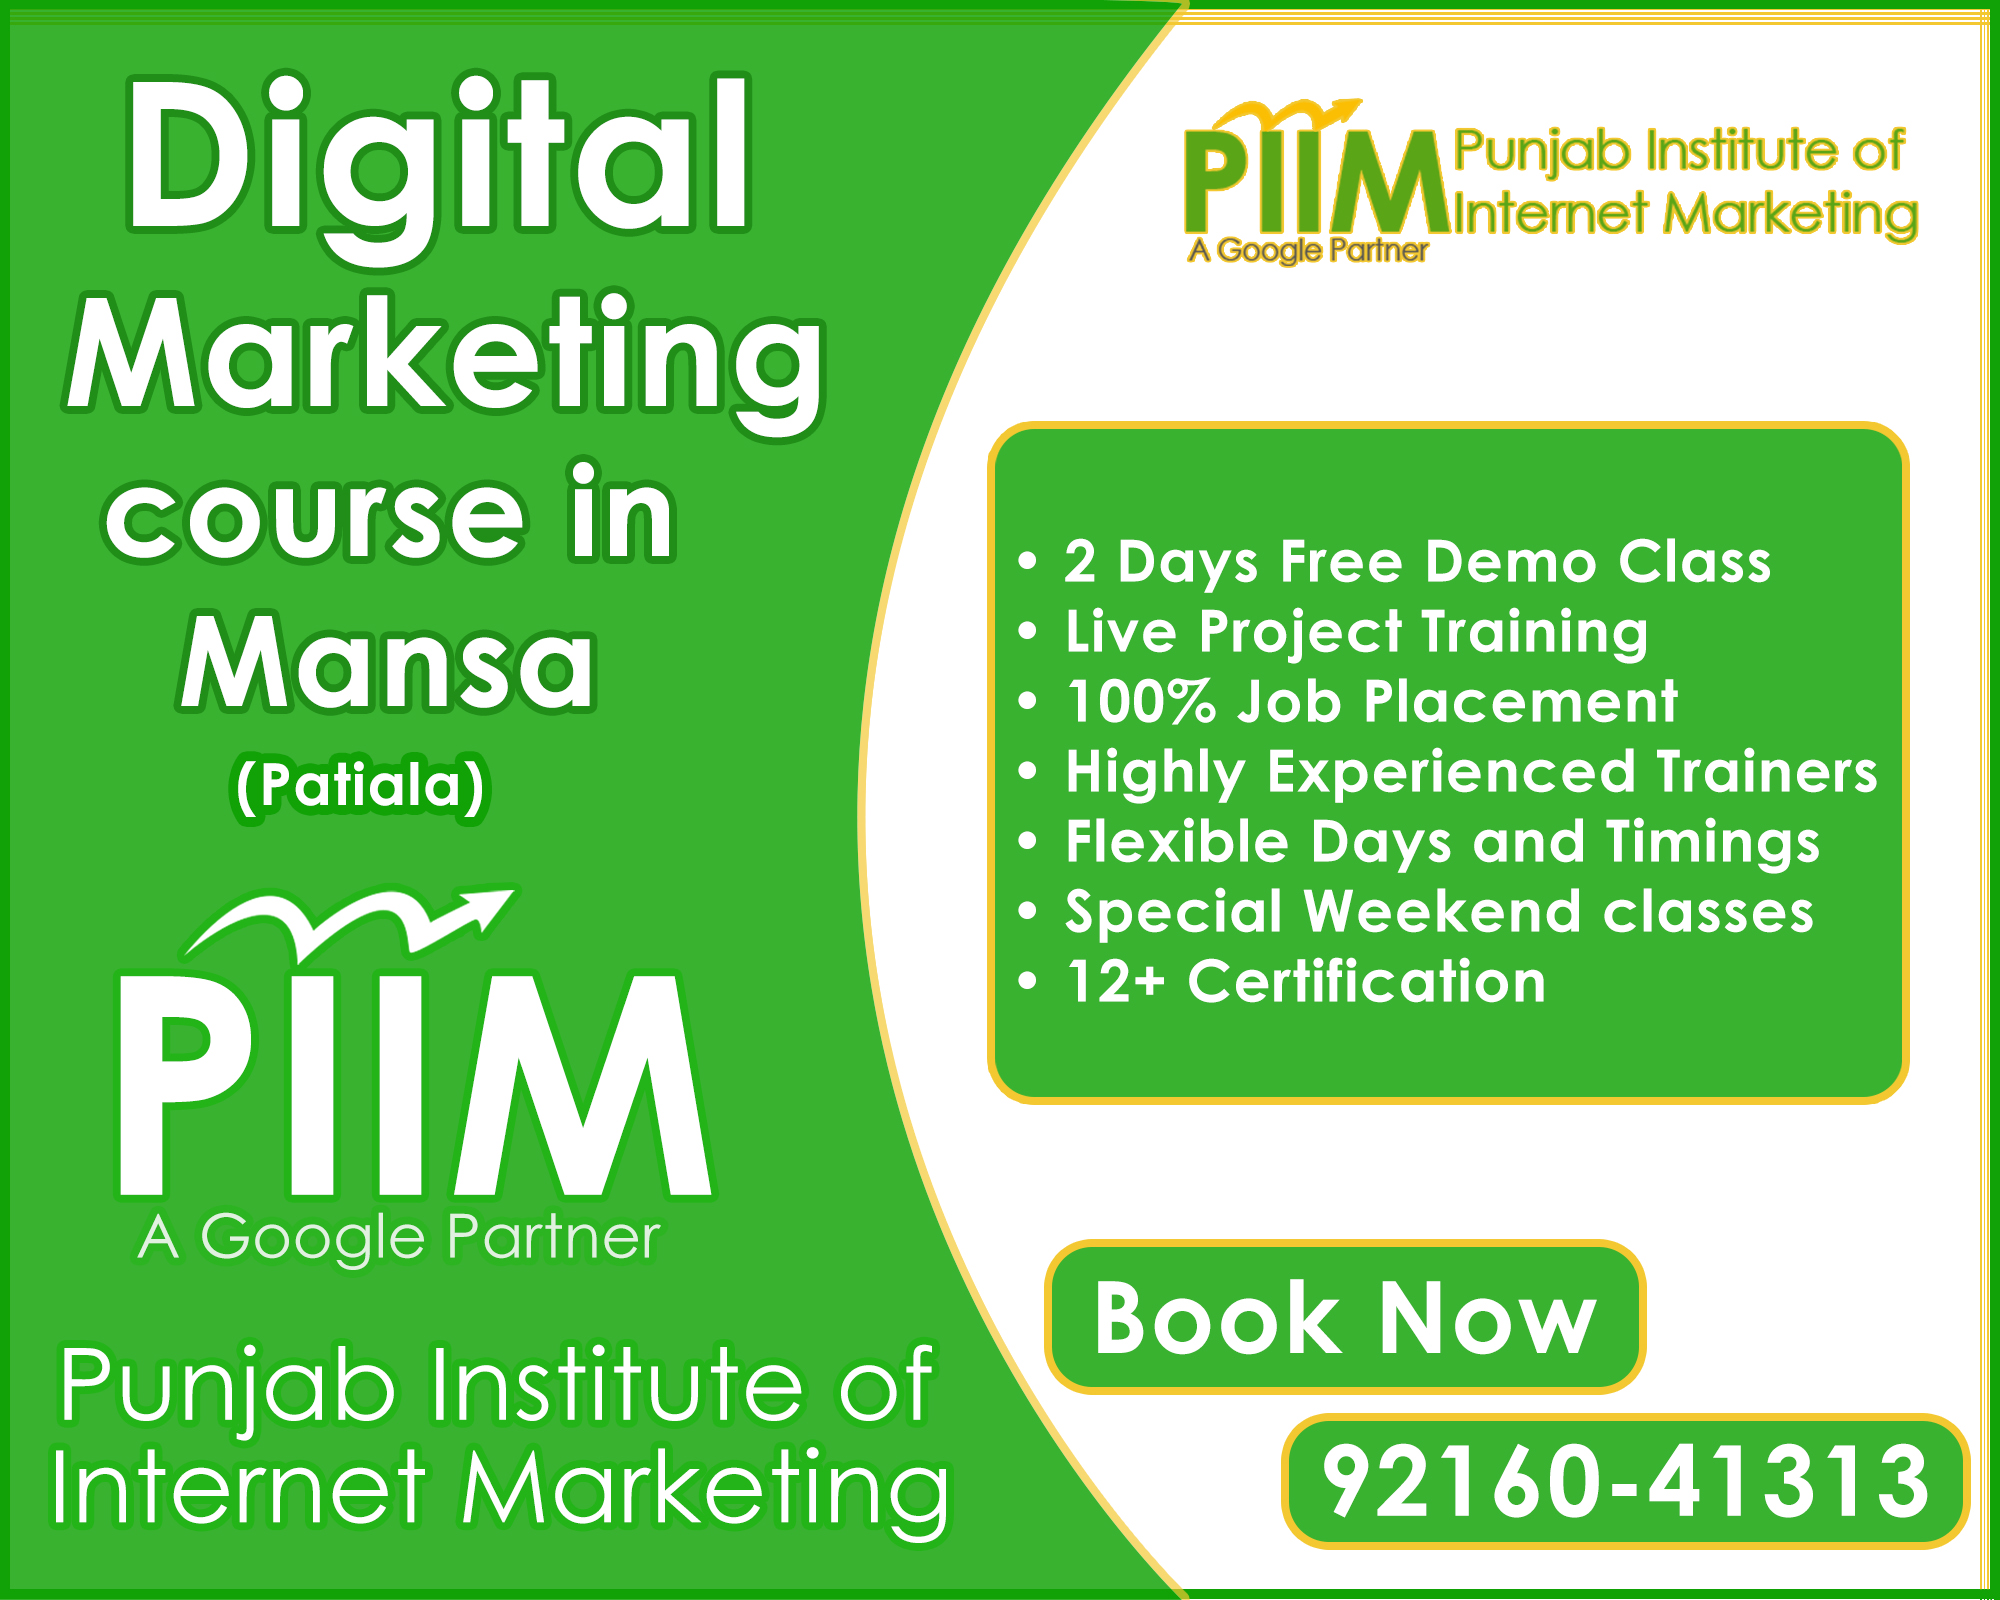 Digital Marketing Course in Mansa